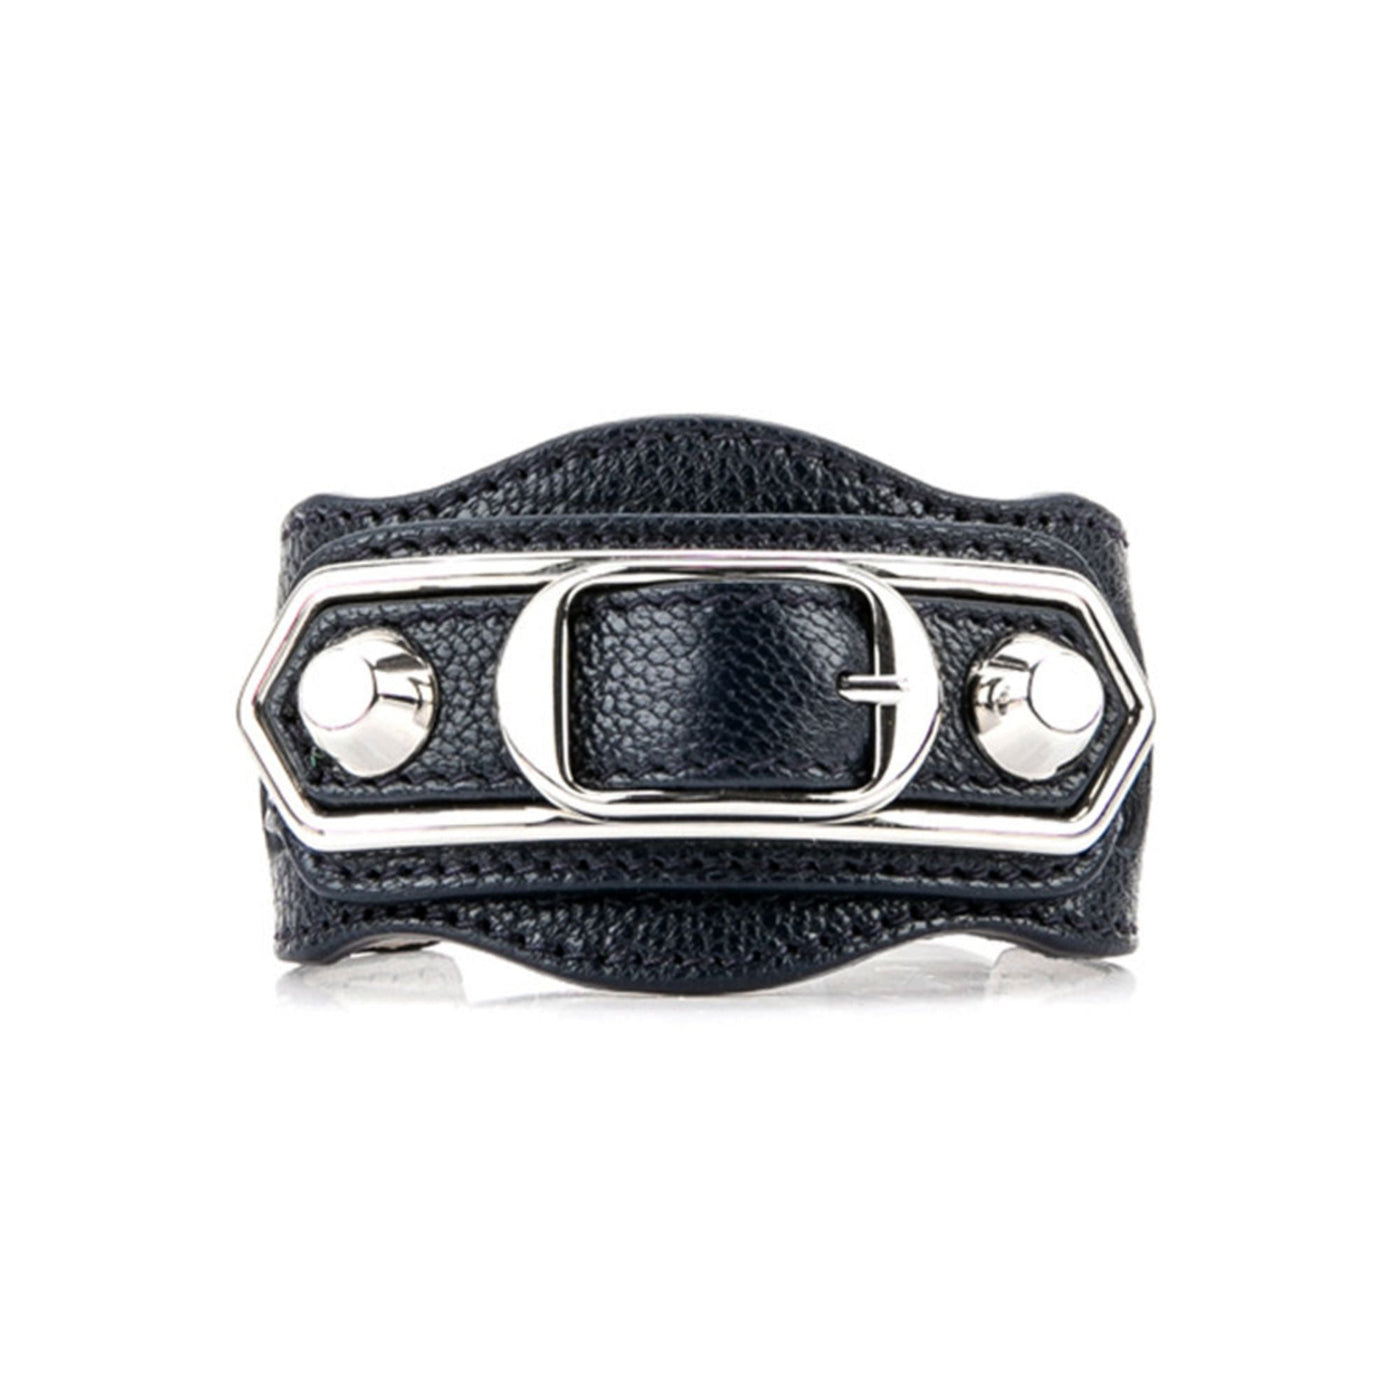 Balenciaga Black Shiny Calfskin Leather Studs Buckle Bracelet - LUXURYMRKT